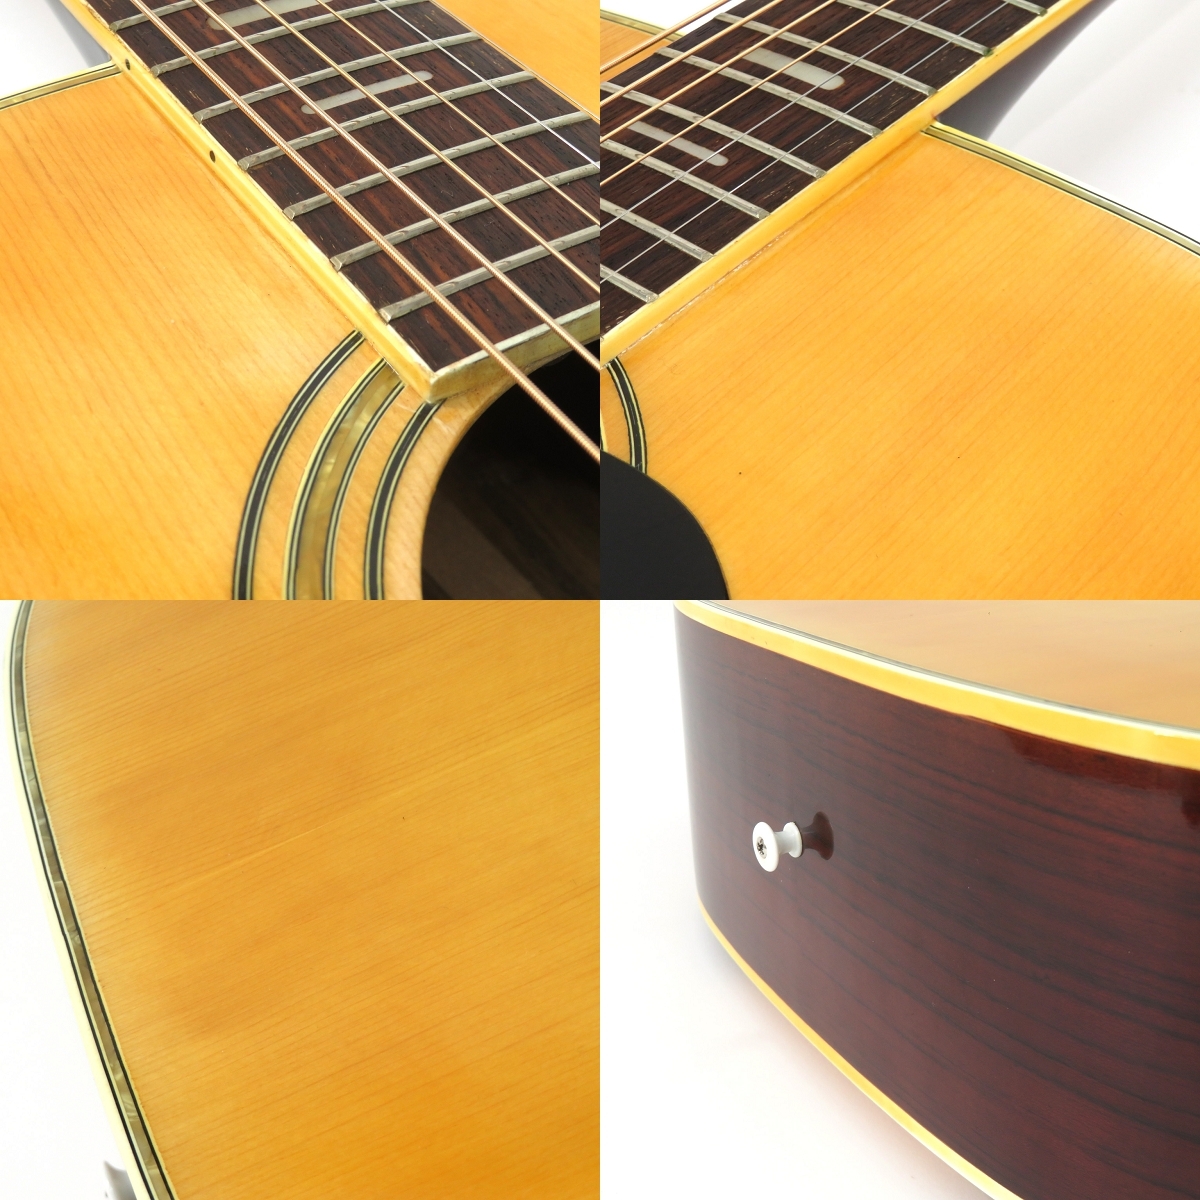 KISO SUZUKI GH-250 アコースティックギター - アコースティックギター